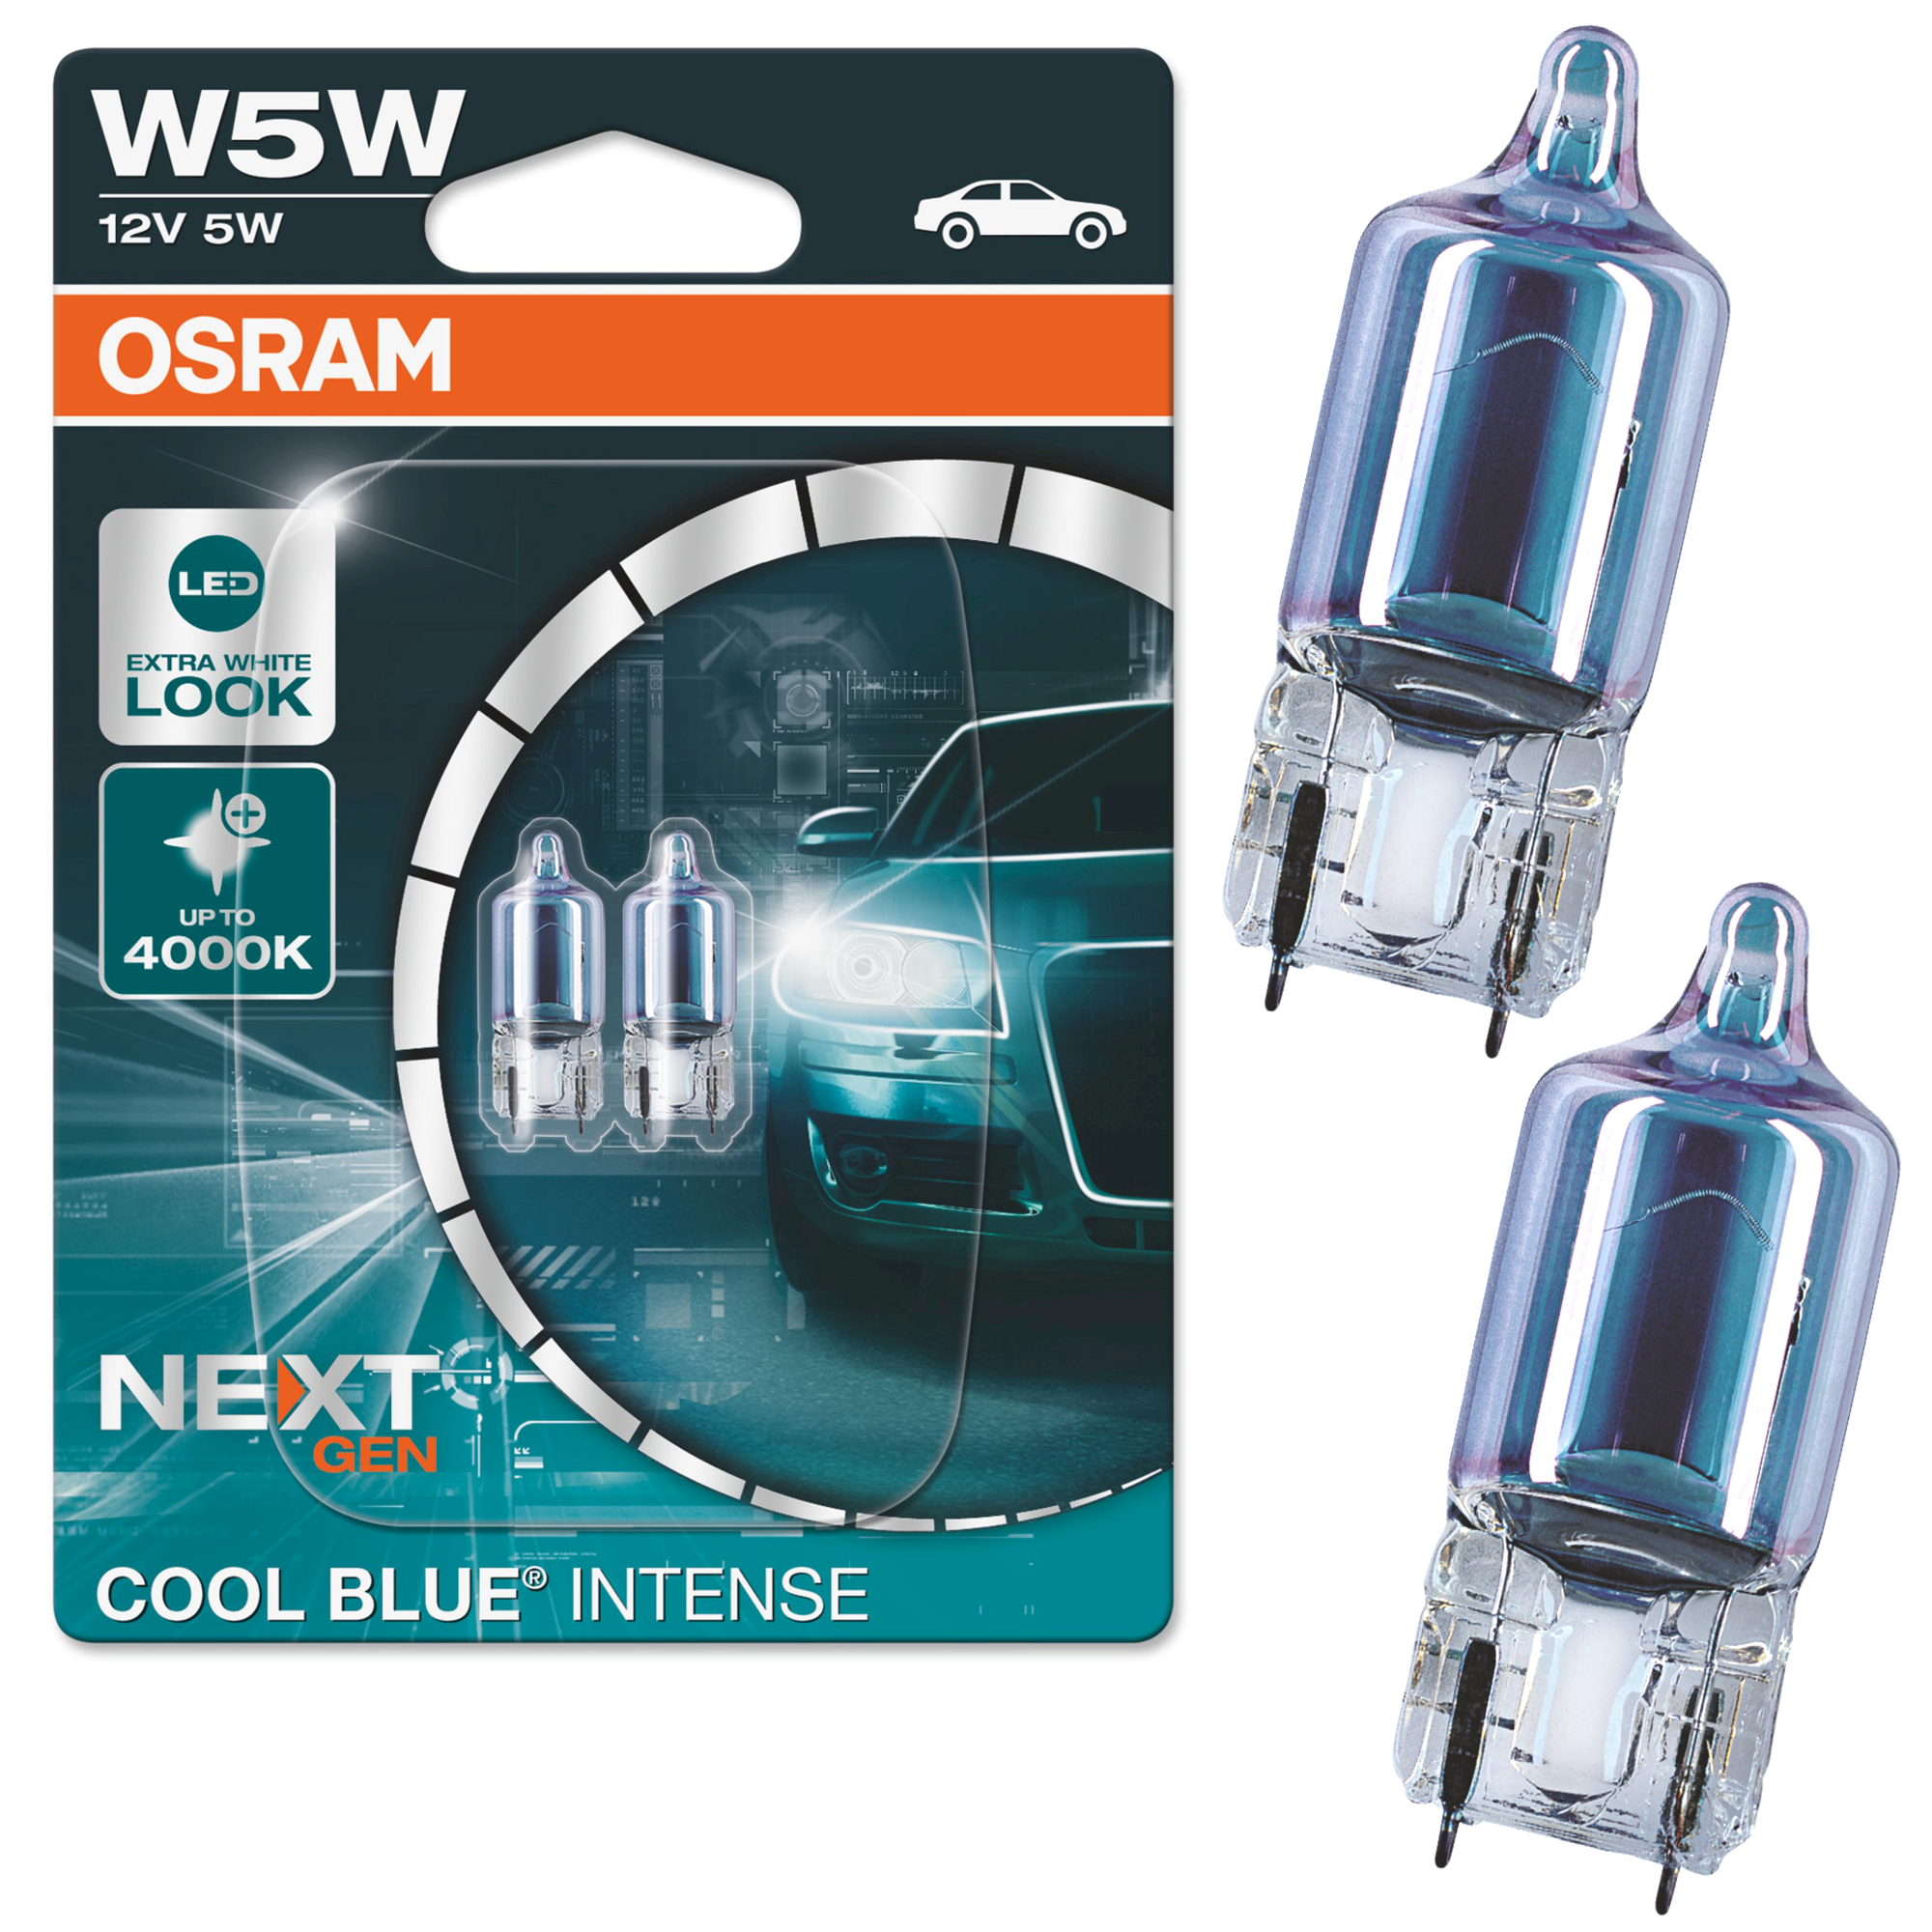 OSRAM W5W 12V Cool Blue Intense Next Generation